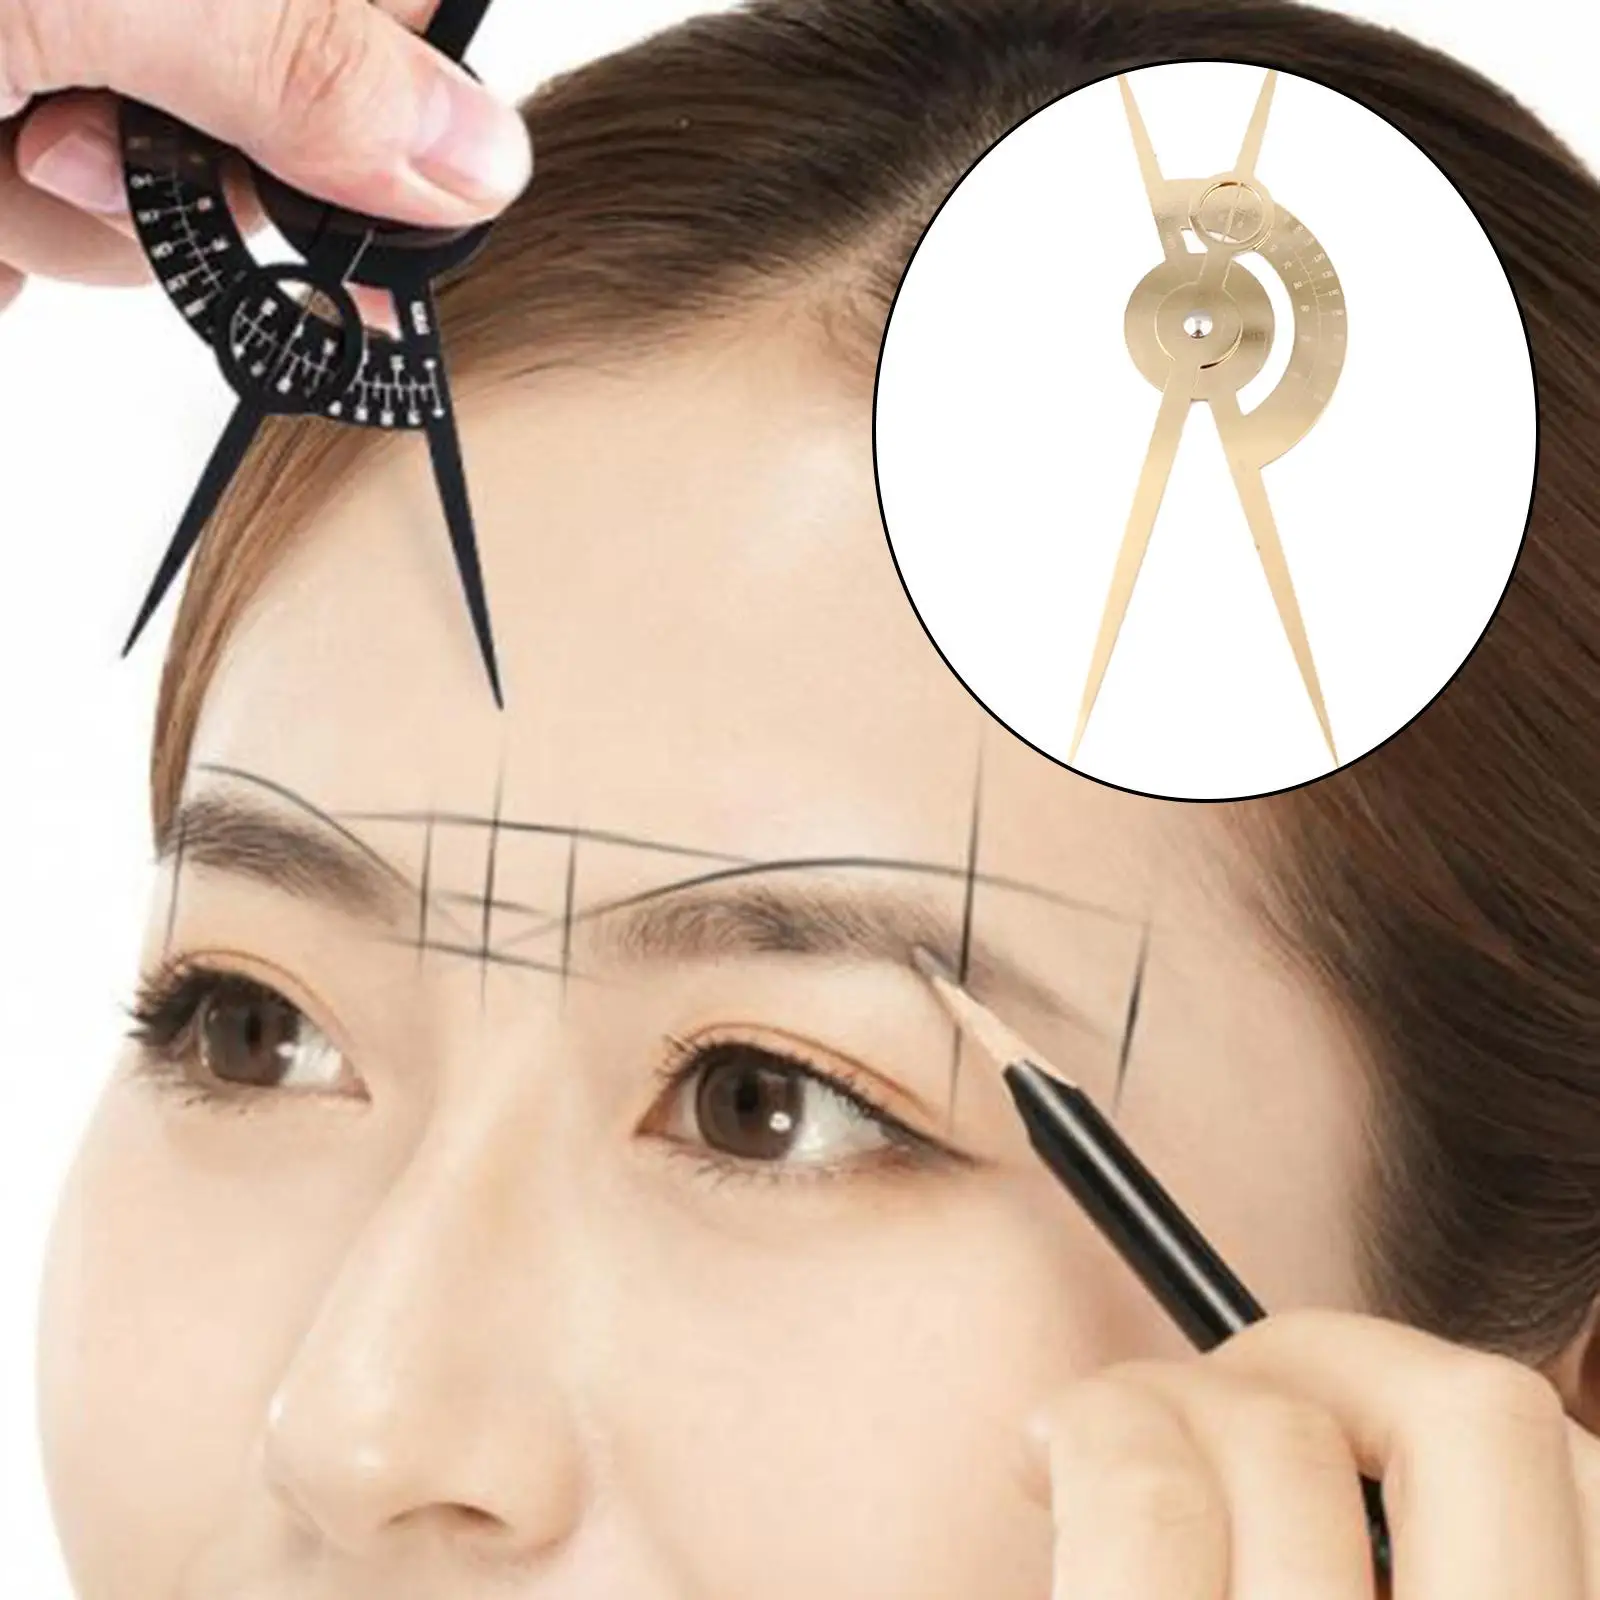  Ratio Caliper Eyebrow Stainless Steel Ruler for Permanent Makeup Shaper DIY 